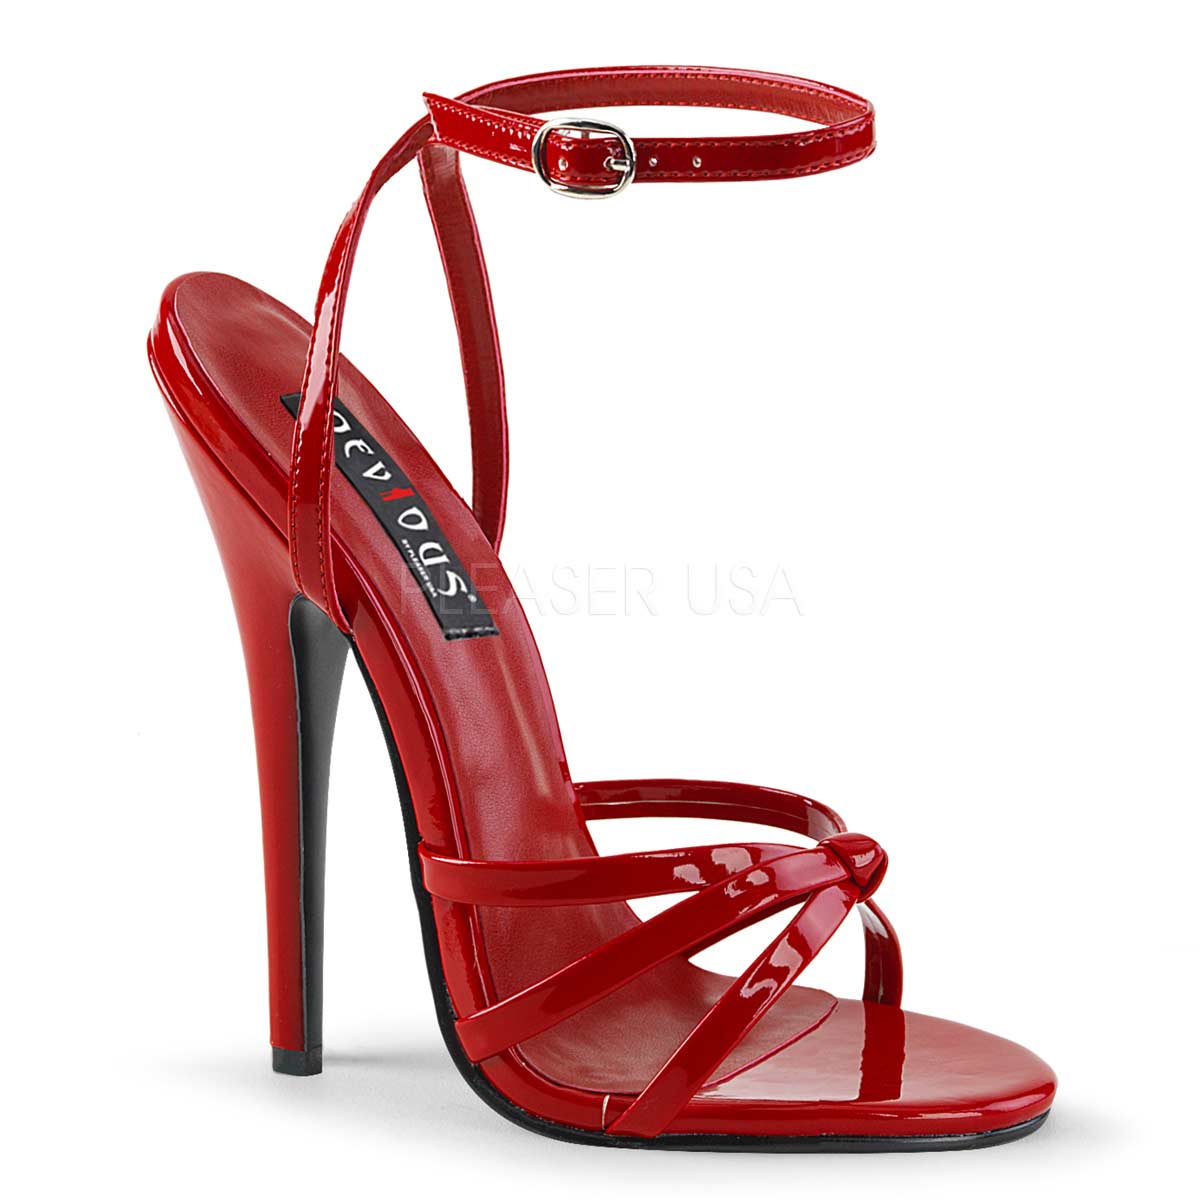 Pleaser Domina-108 - Red Pat in Sexy Heels & Platforms - $53.95